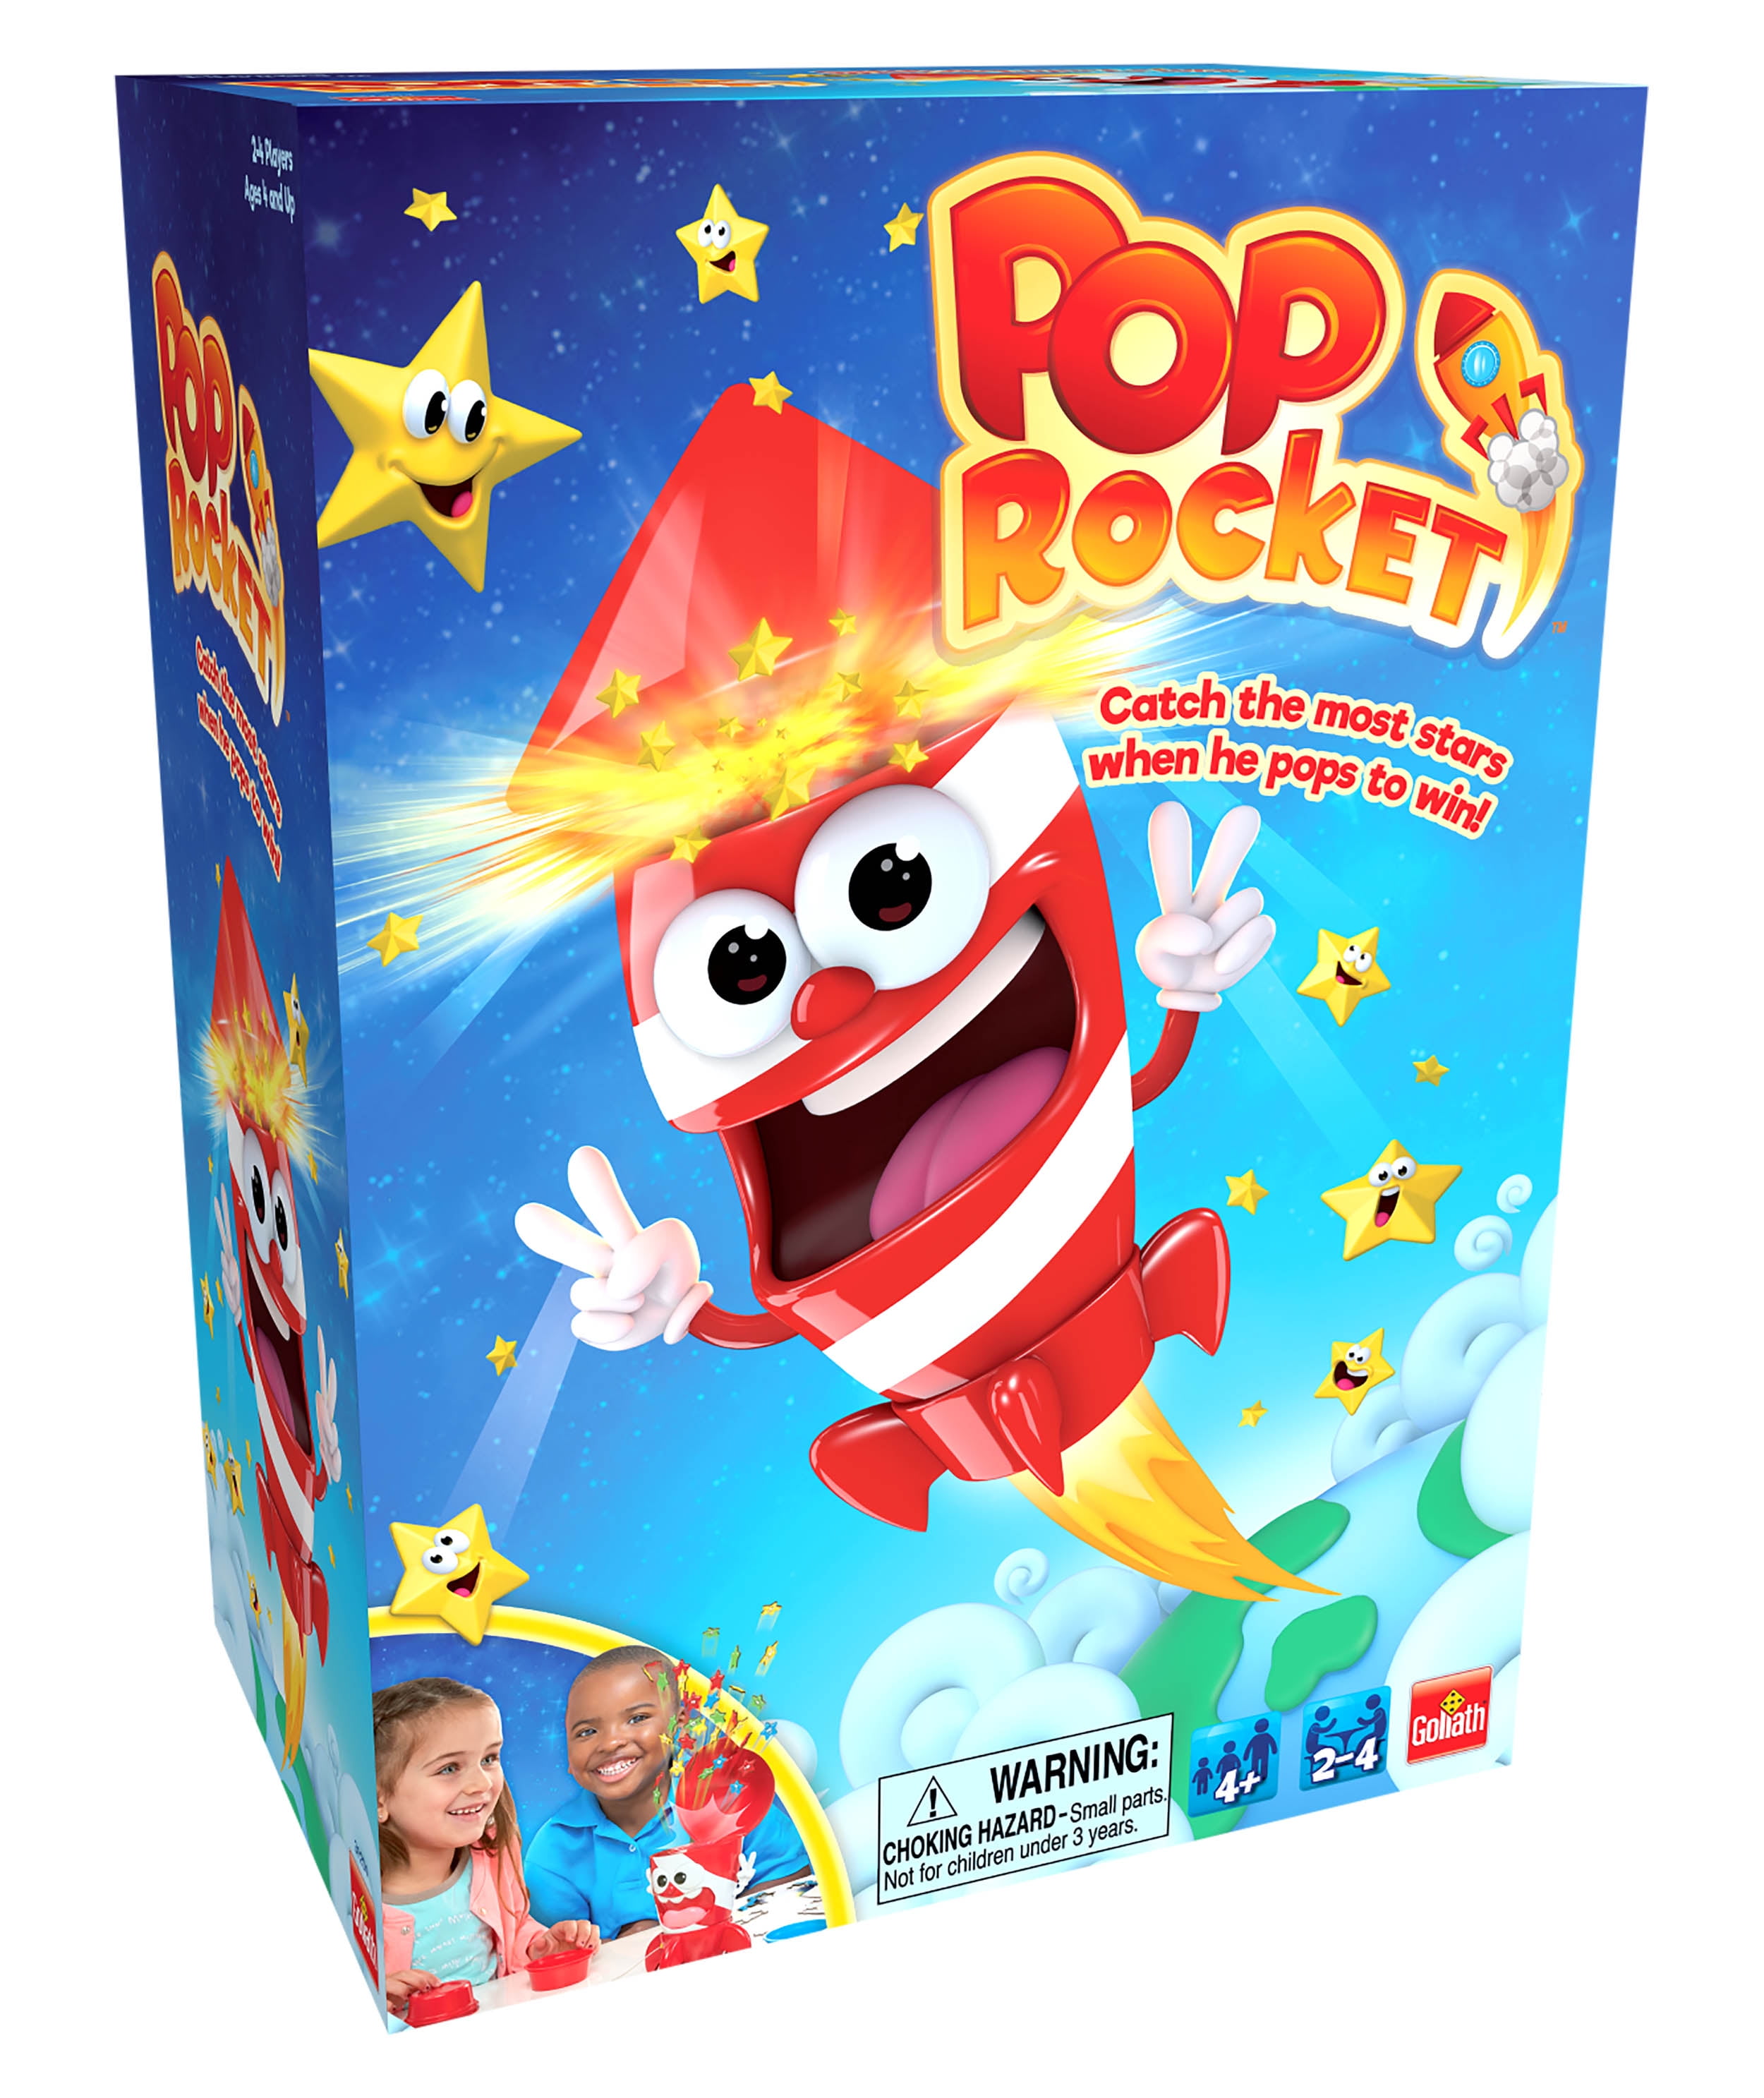 Rocket Games